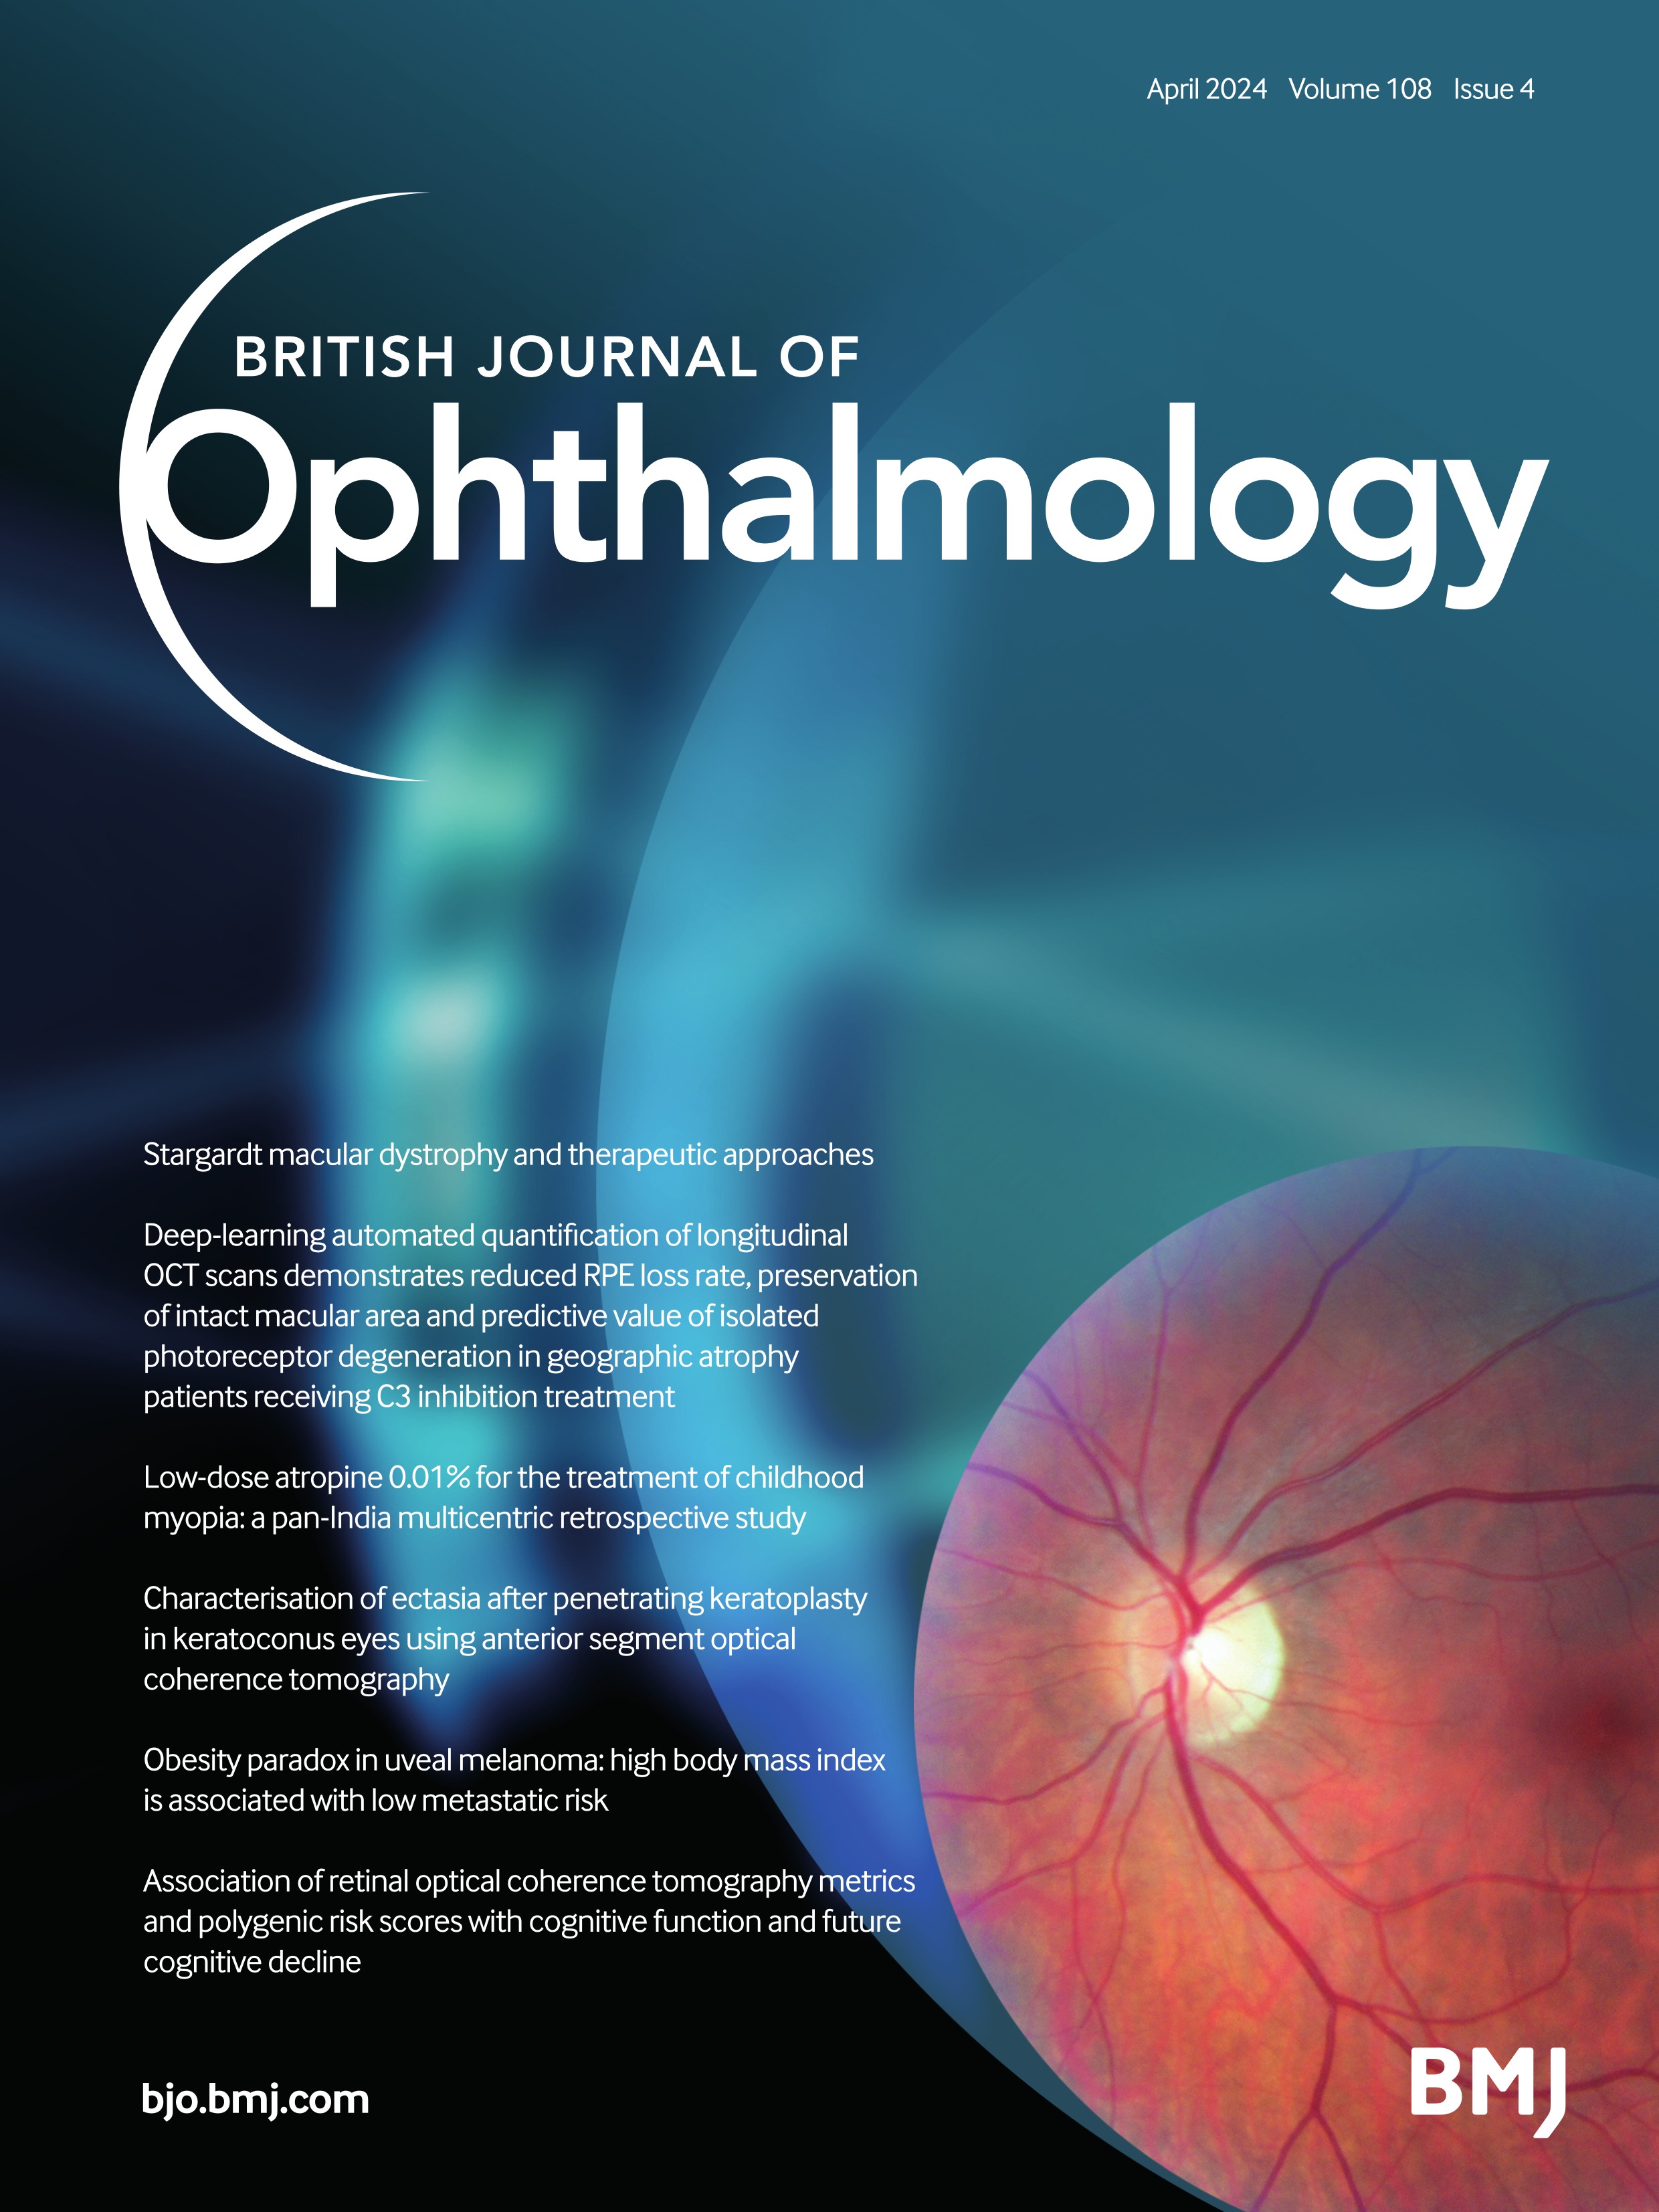 Pan-Indian multicentre retrospective study of 0.01% atropine for myopia control